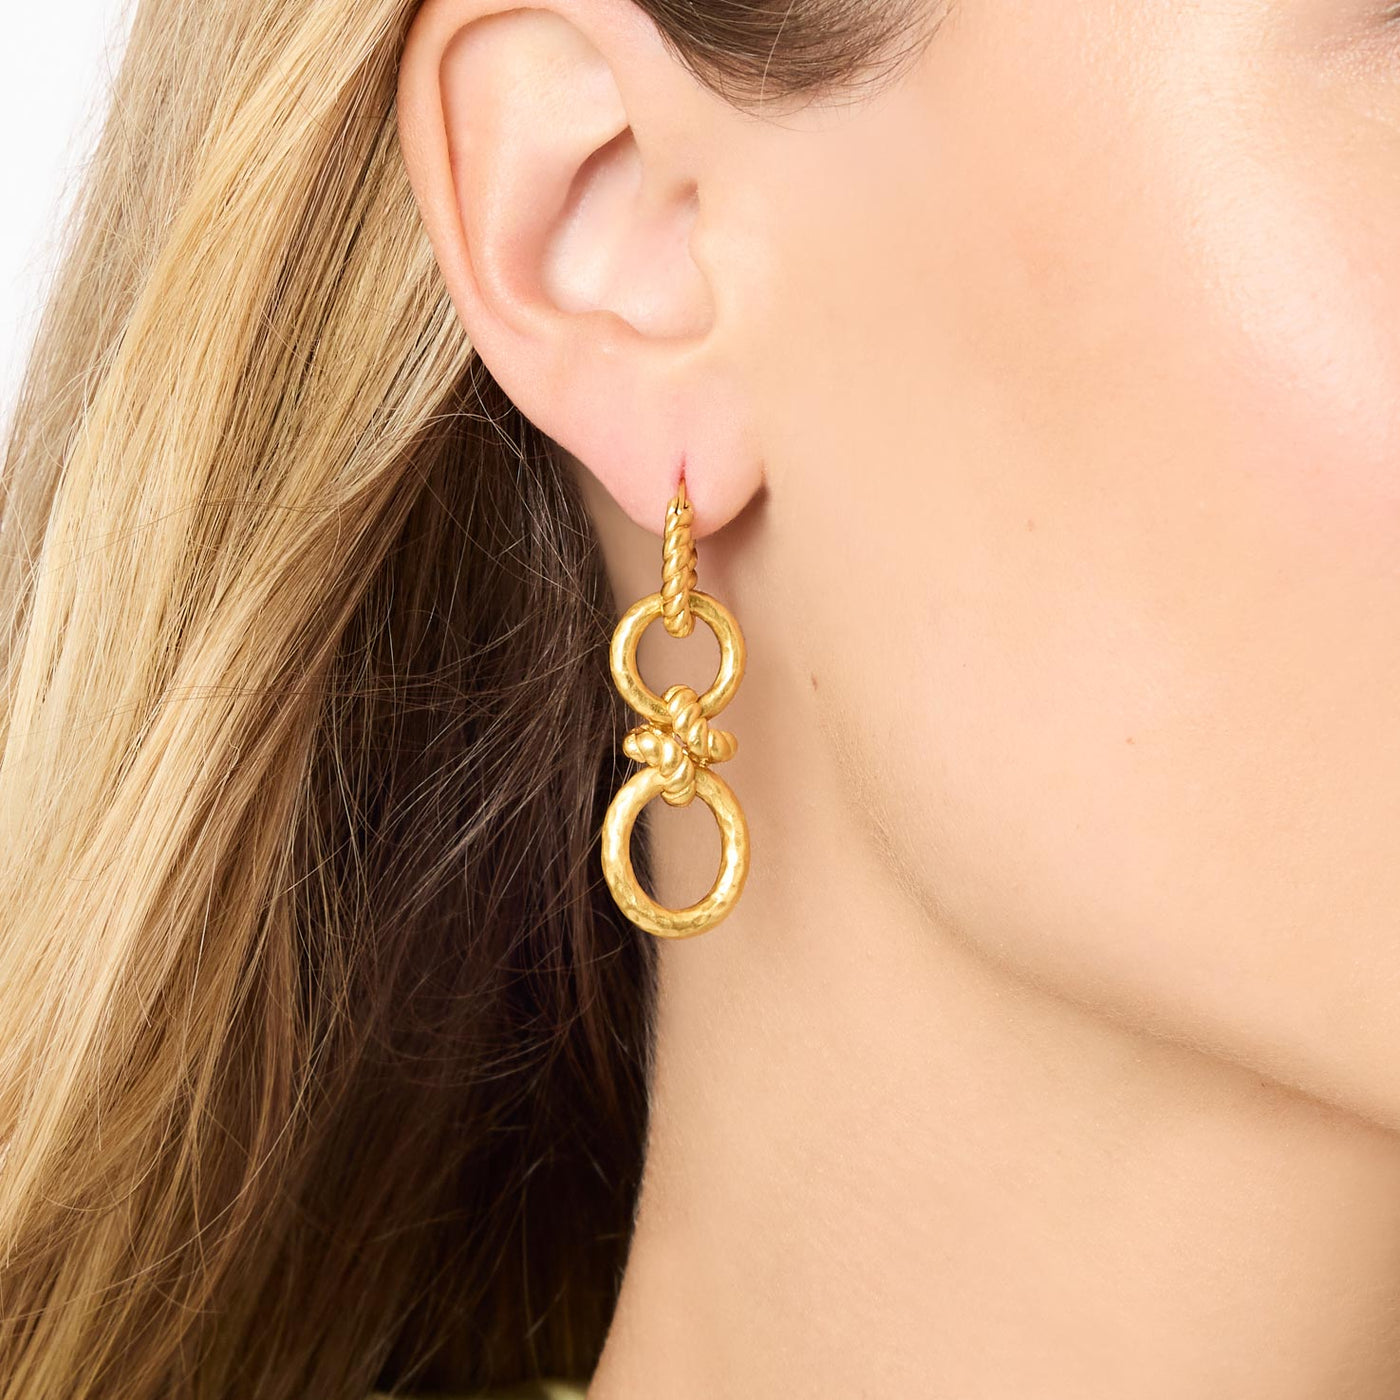 Nassau 2-in-1 Earring - Gold